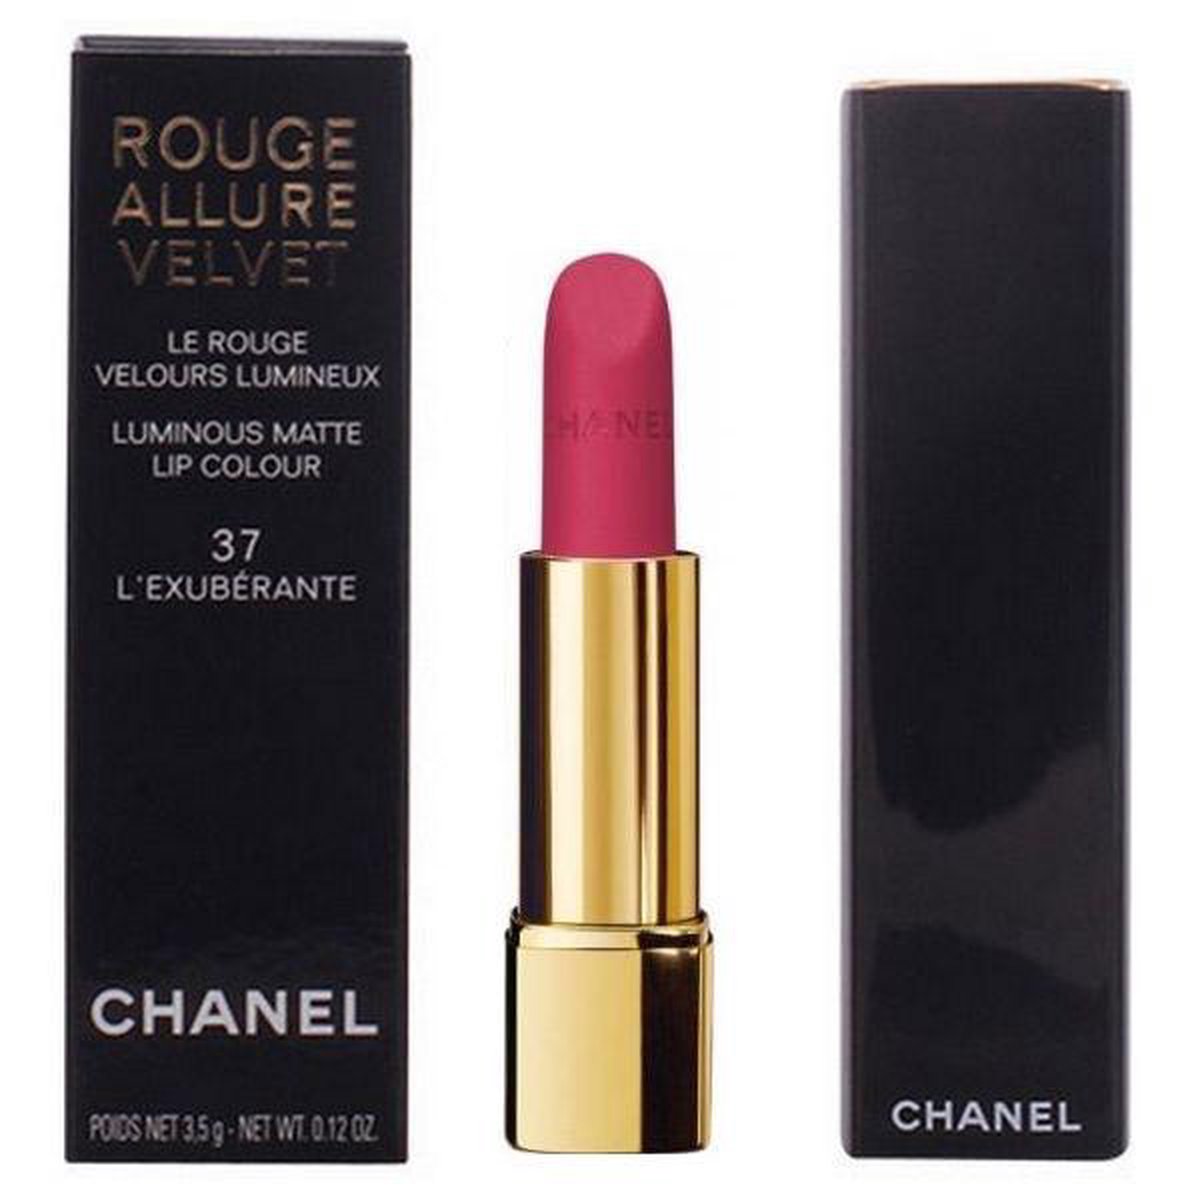 Chanel Rouge Allure Velvet Extreme 3.5g/0.12oz buy in United